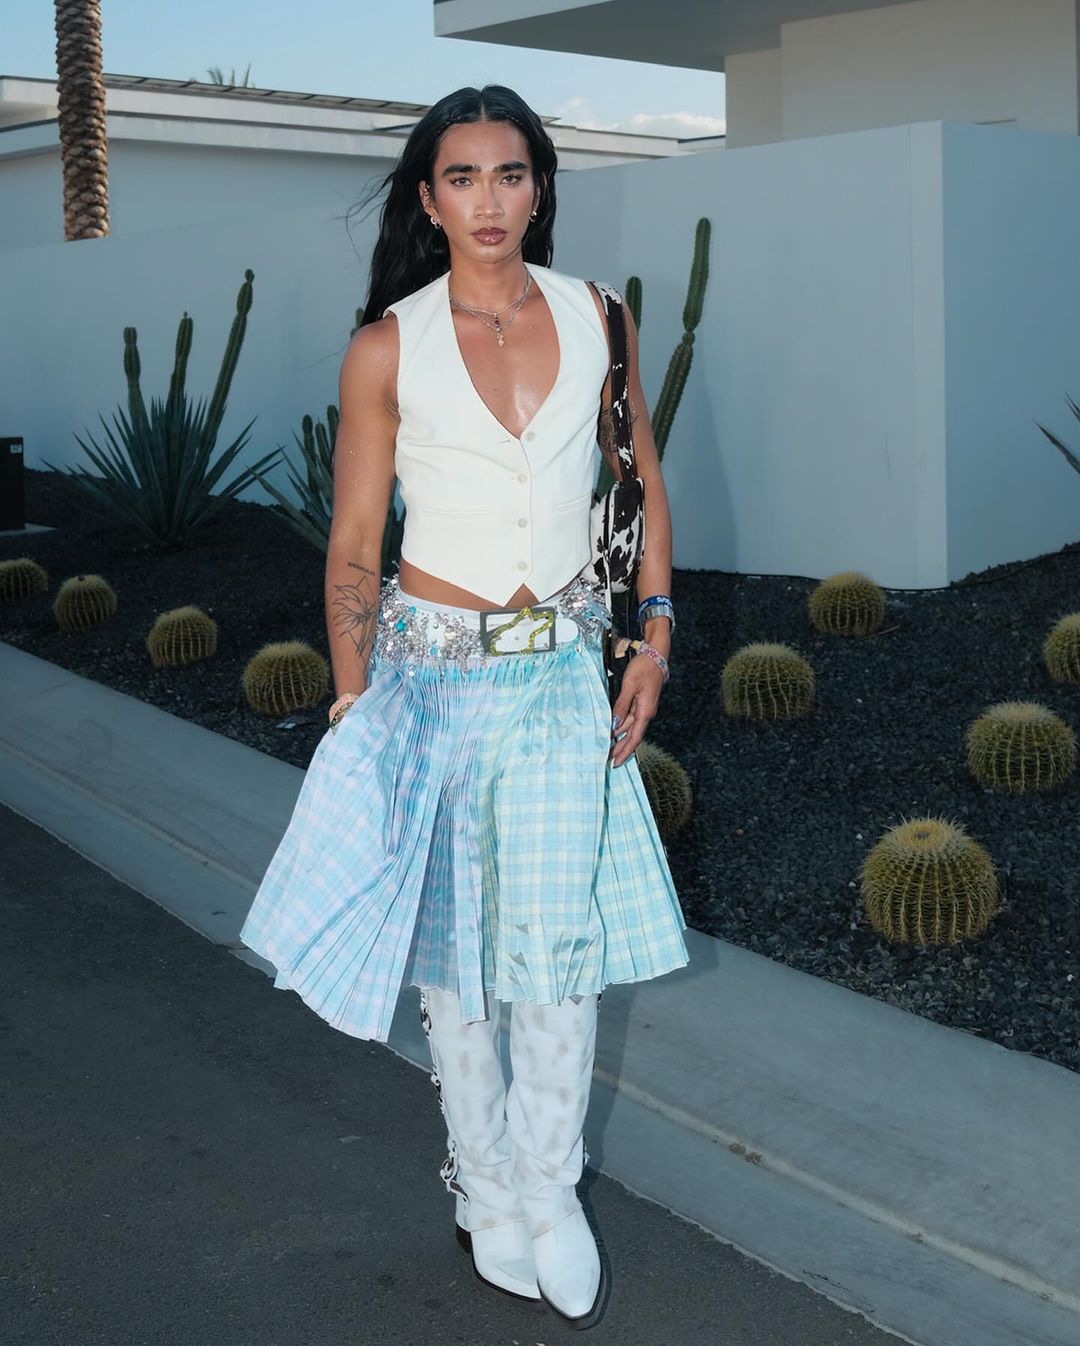 MEGA Lookbook: Modern Boho Outfit Ideas as Seen in Coachella